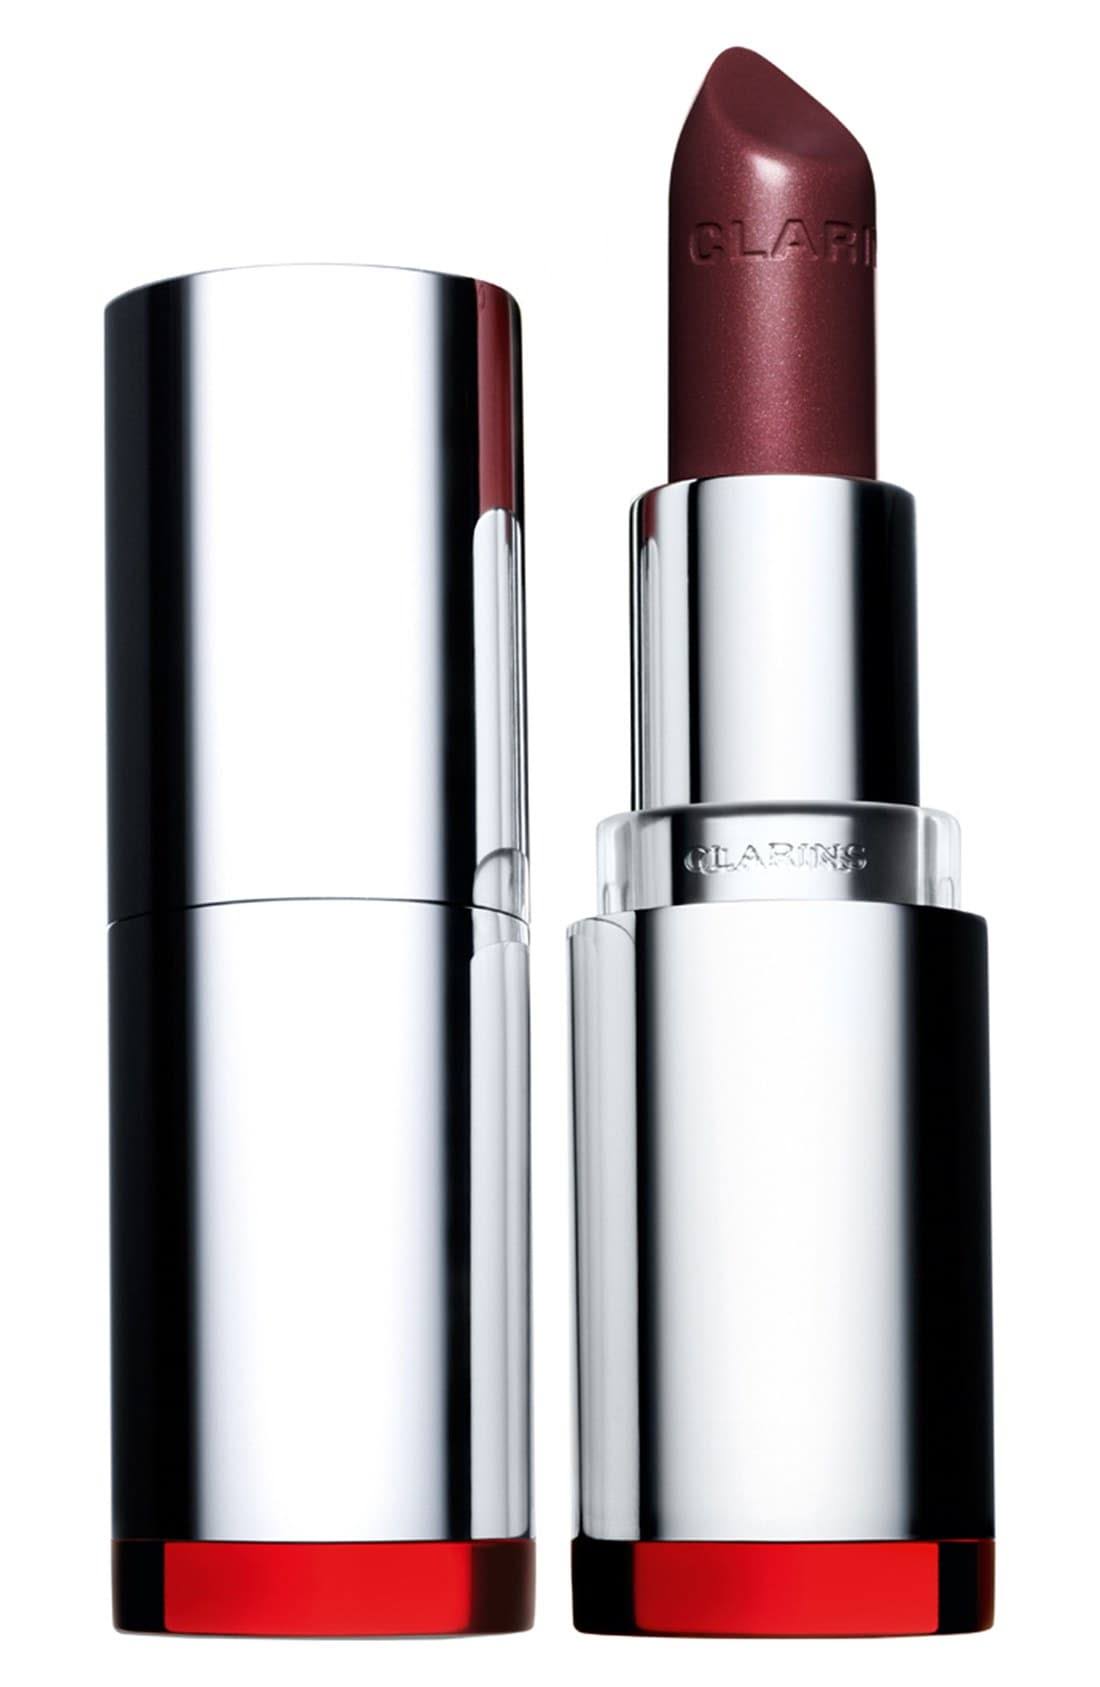 Clarins Joli Rouge Lipstick - Royal Plum, 3.5g